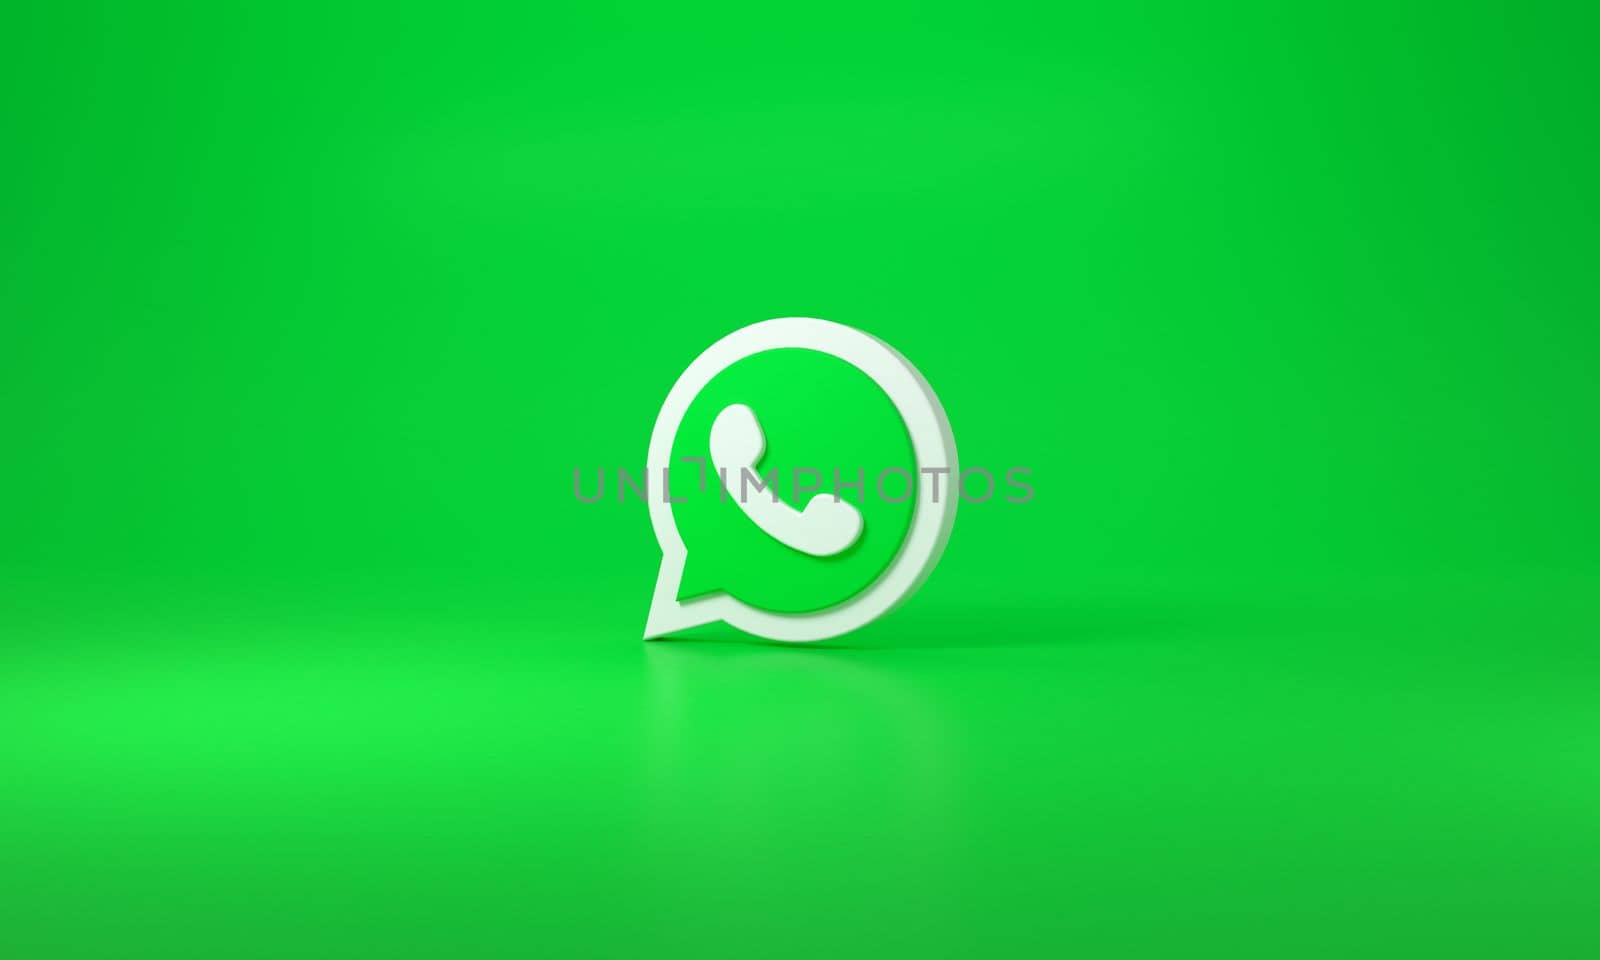 Whatsapp logo on green background. 3D rendering.